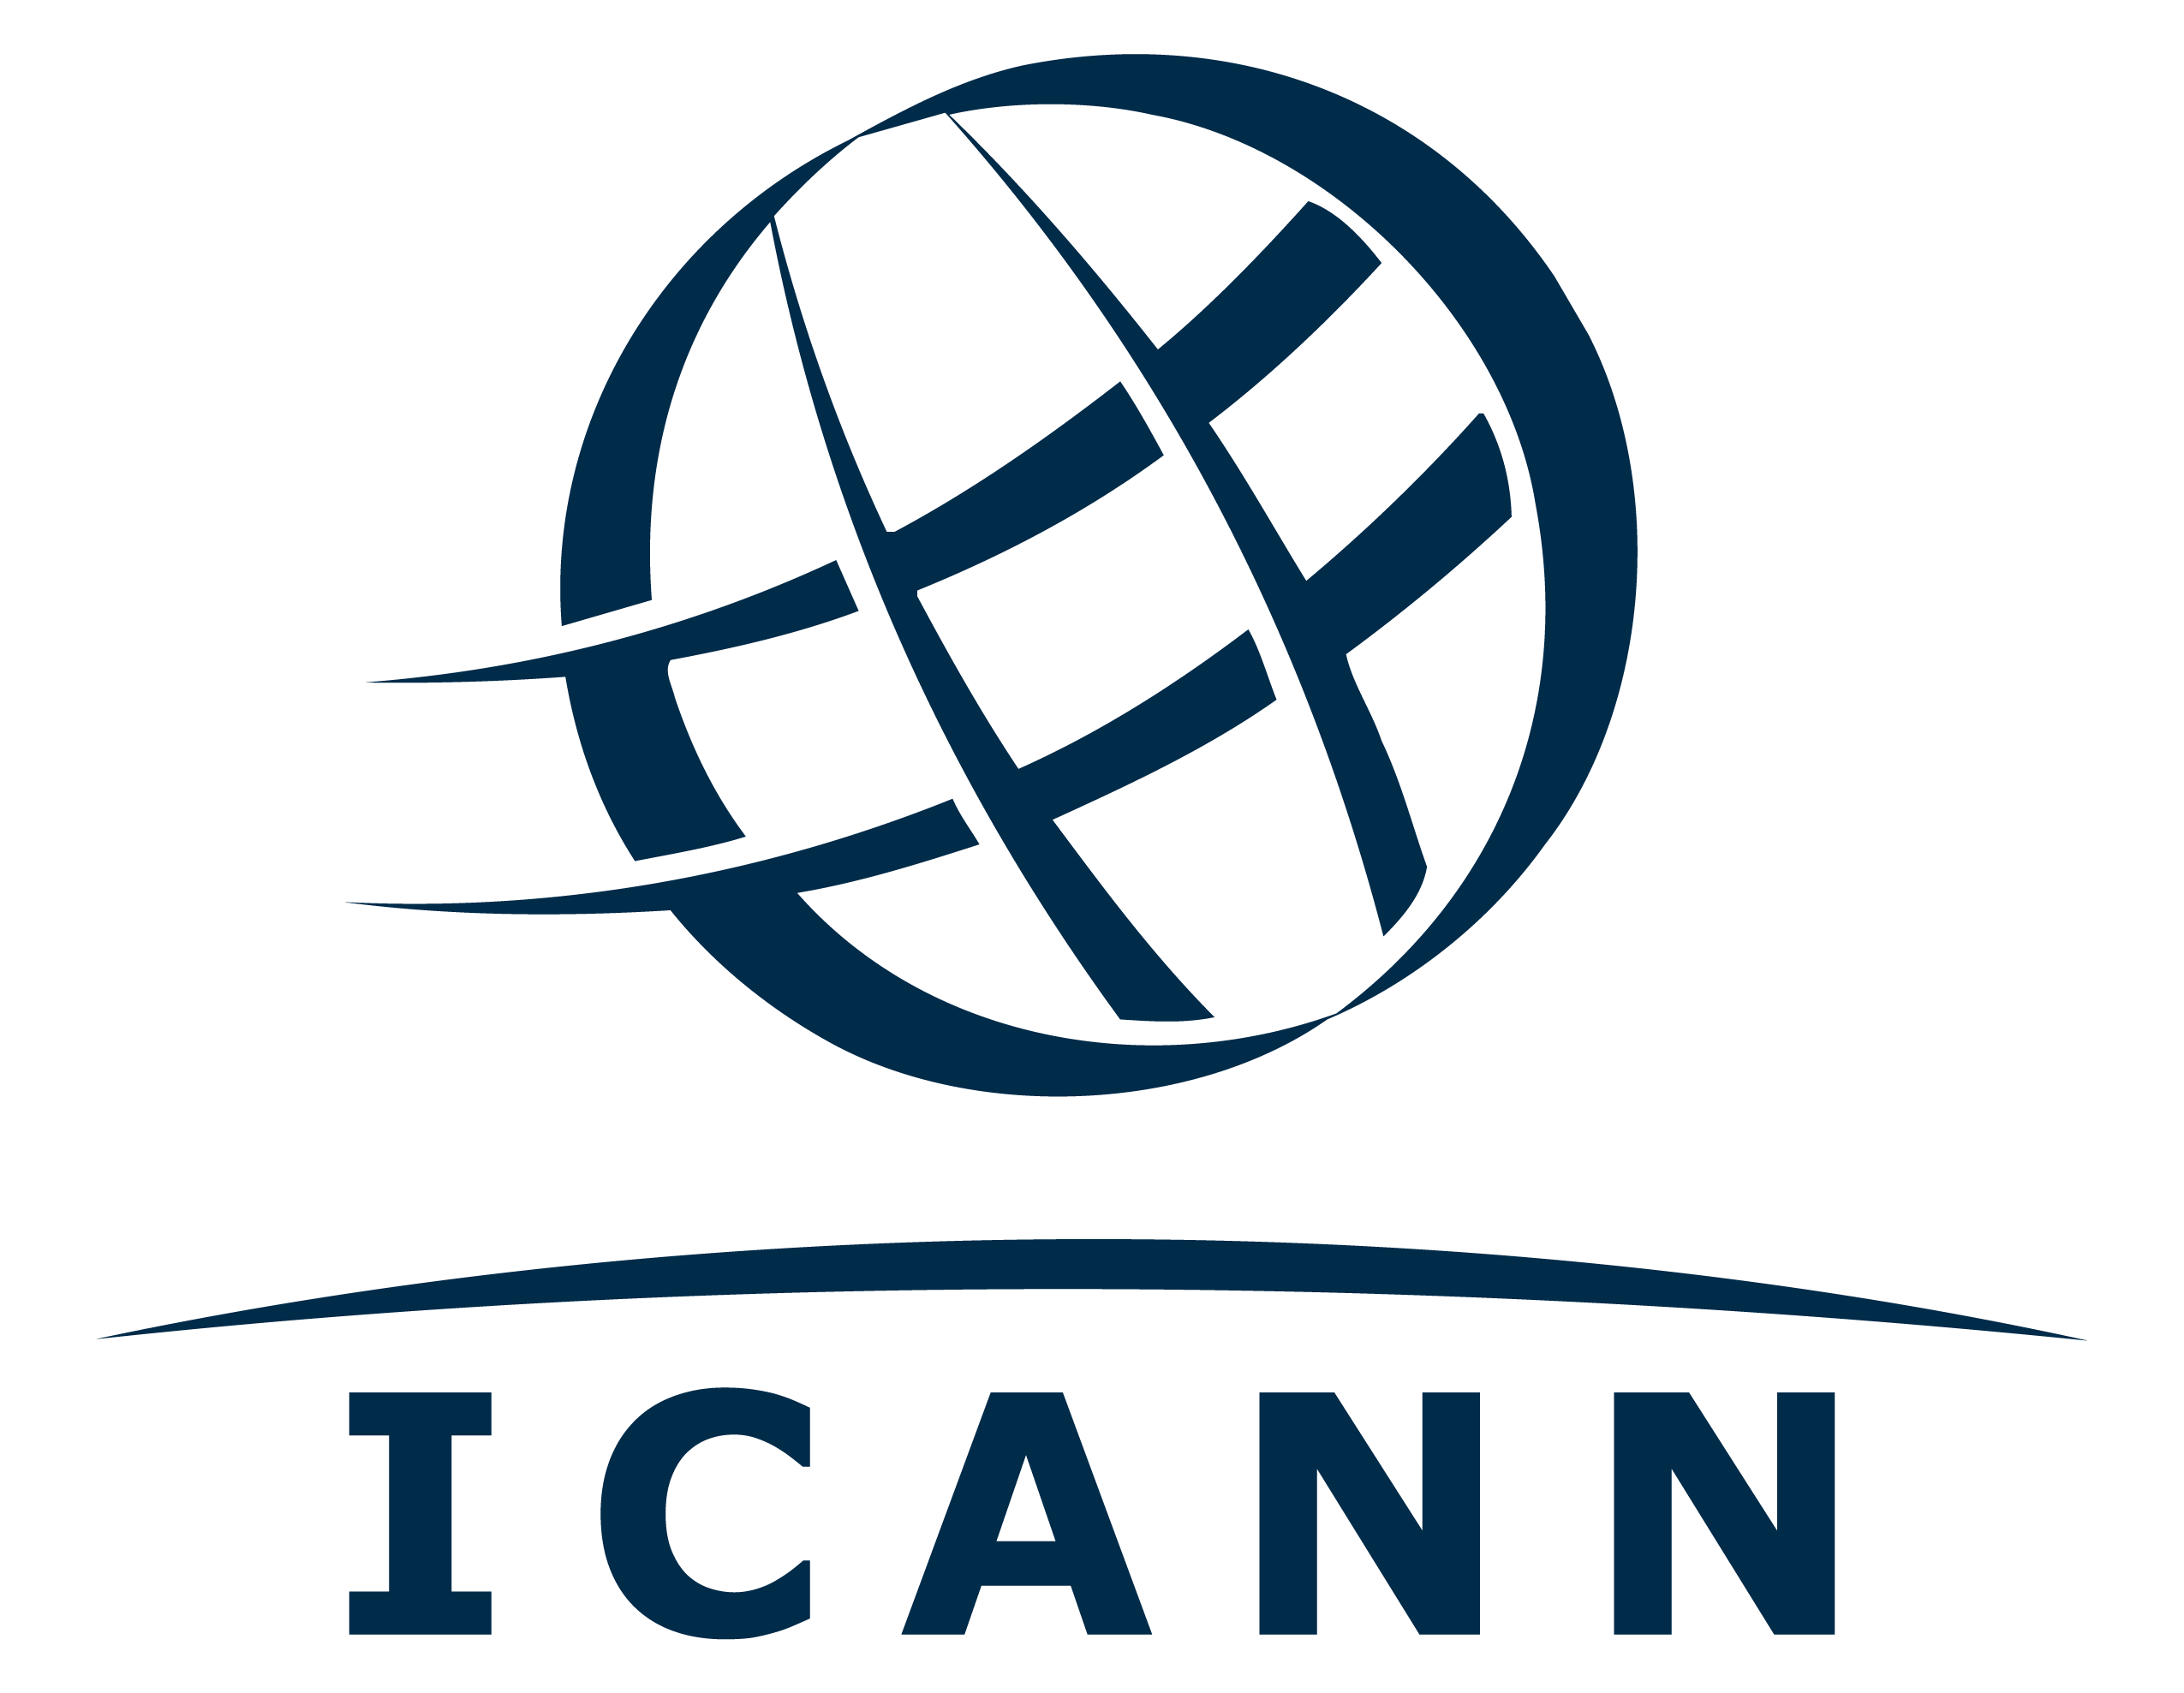 Icann Logo Png Hdpng.com 2550 - Icann, Transparent background PNG HD thumbnail